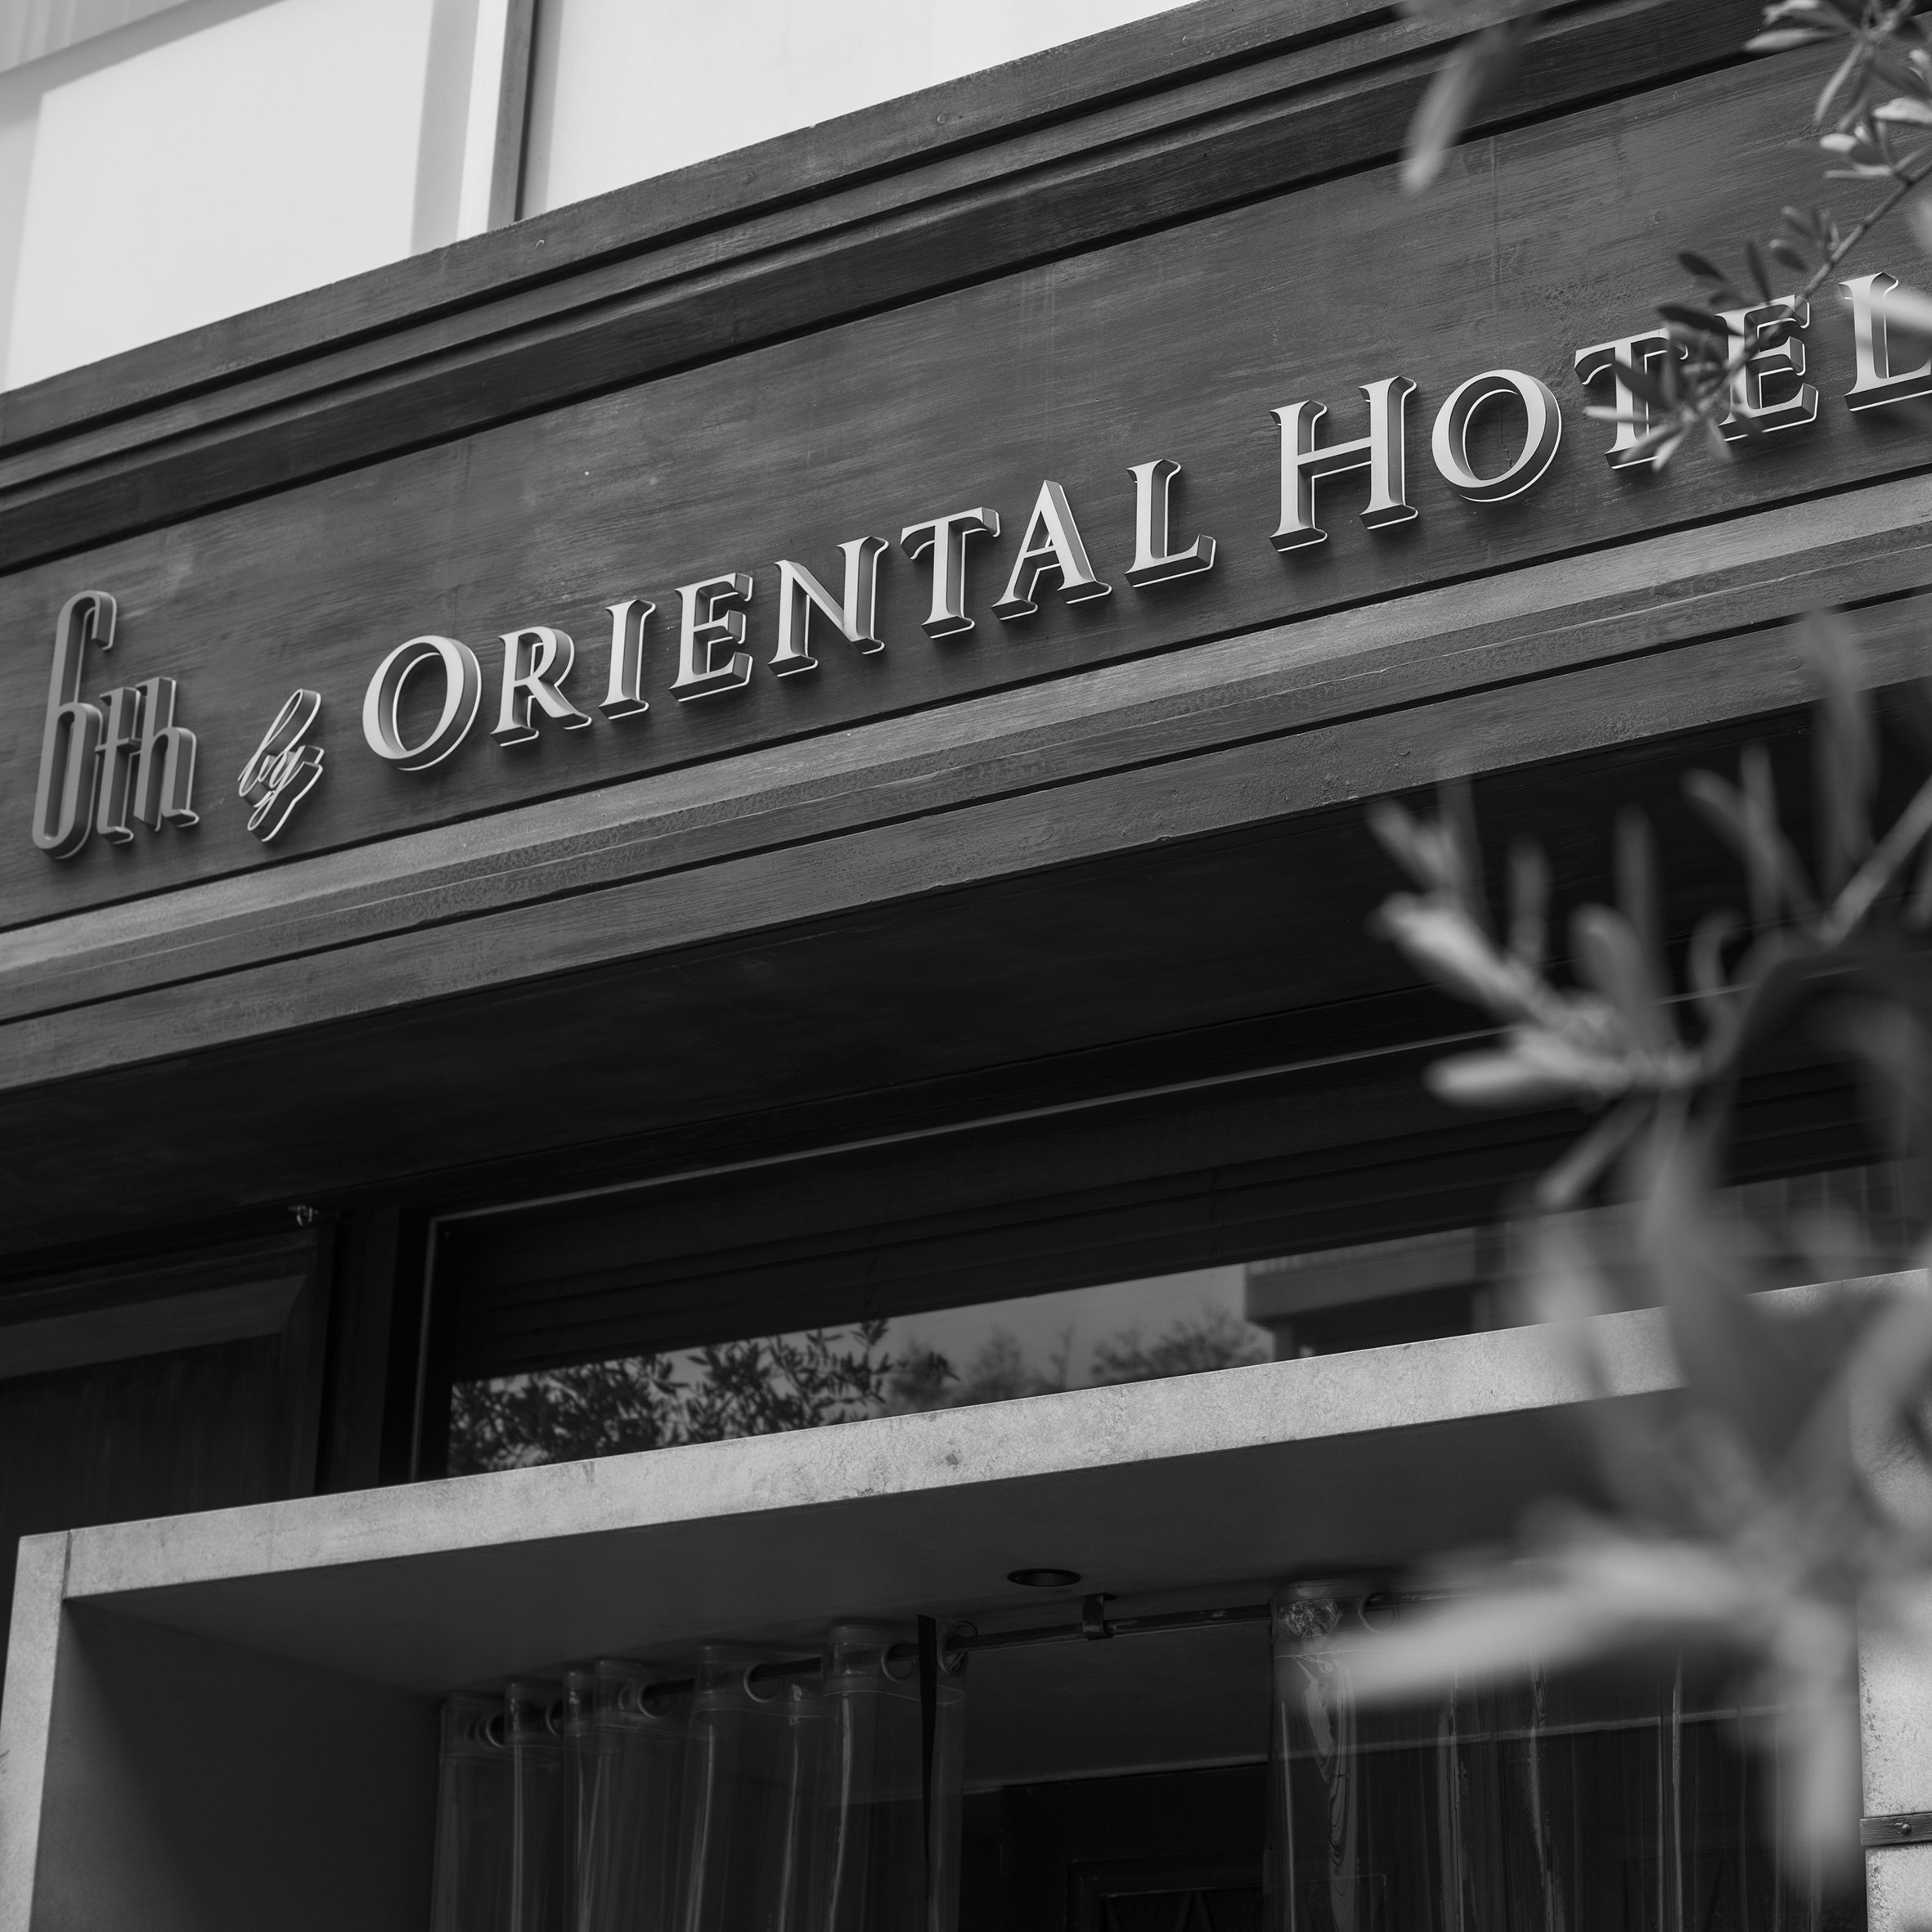 6th by ORIENTAL HOTEL